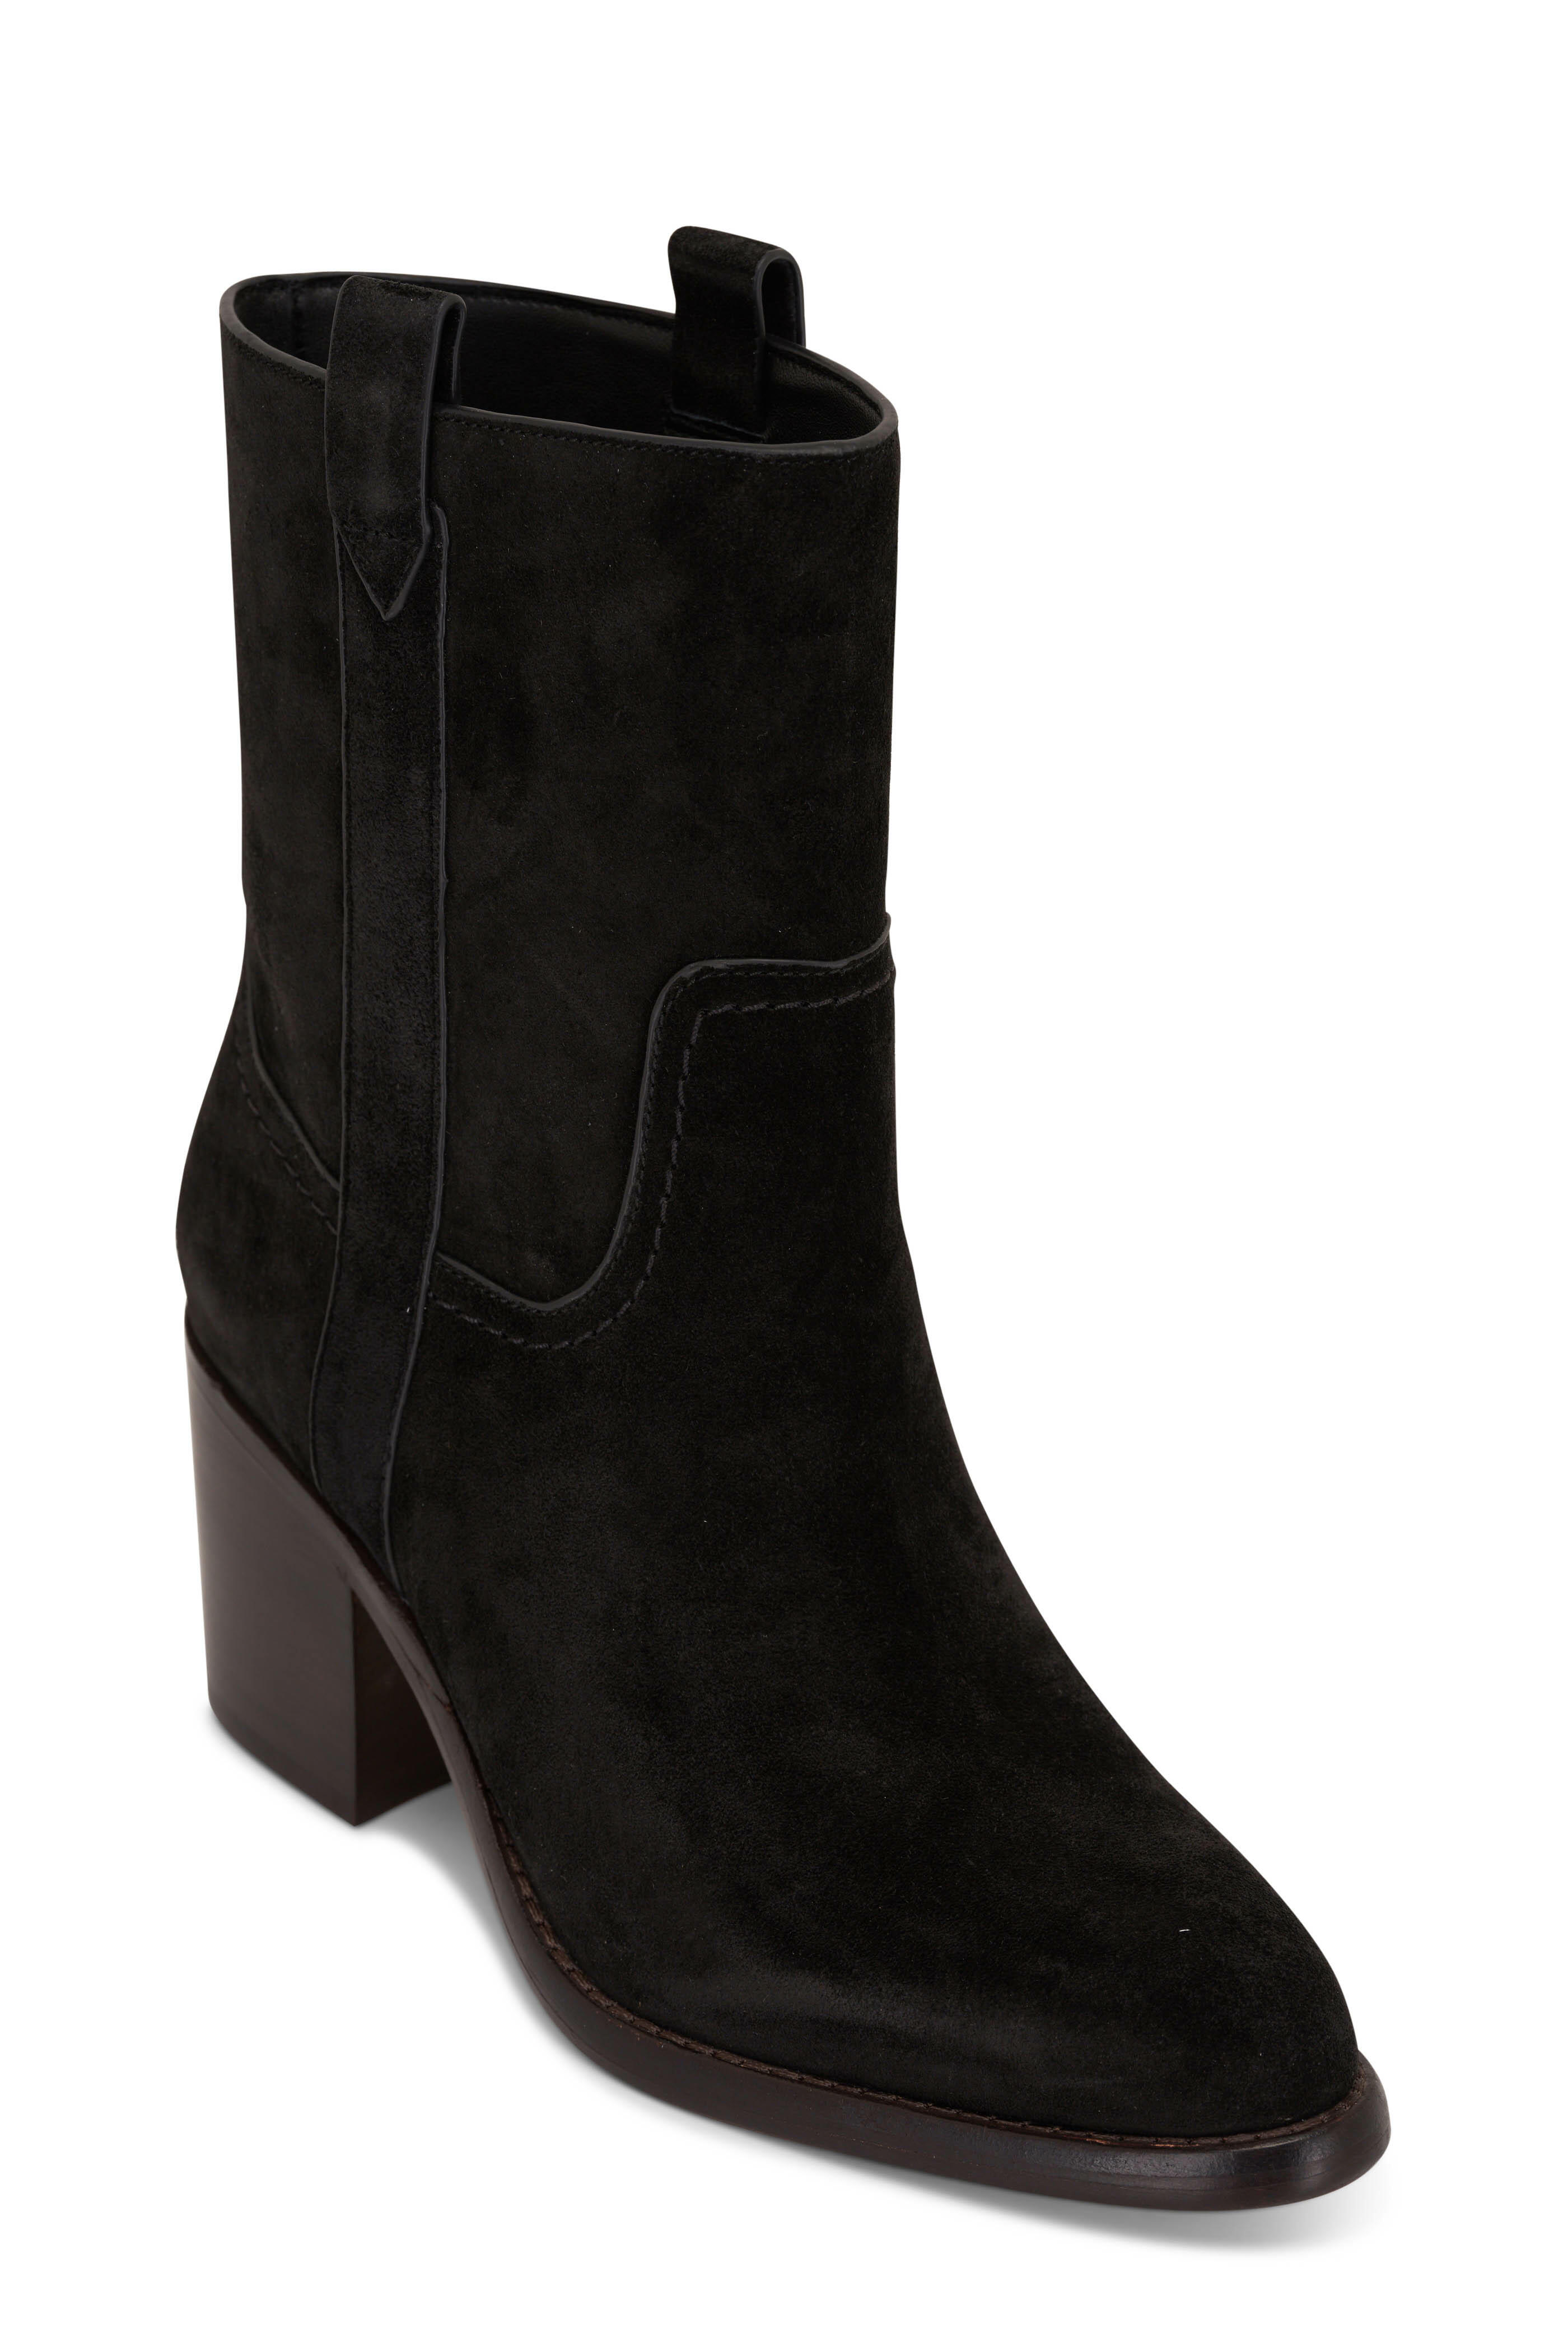 Veronica Beard - Carmen Black Suede Western Ankle Boot, 70mm